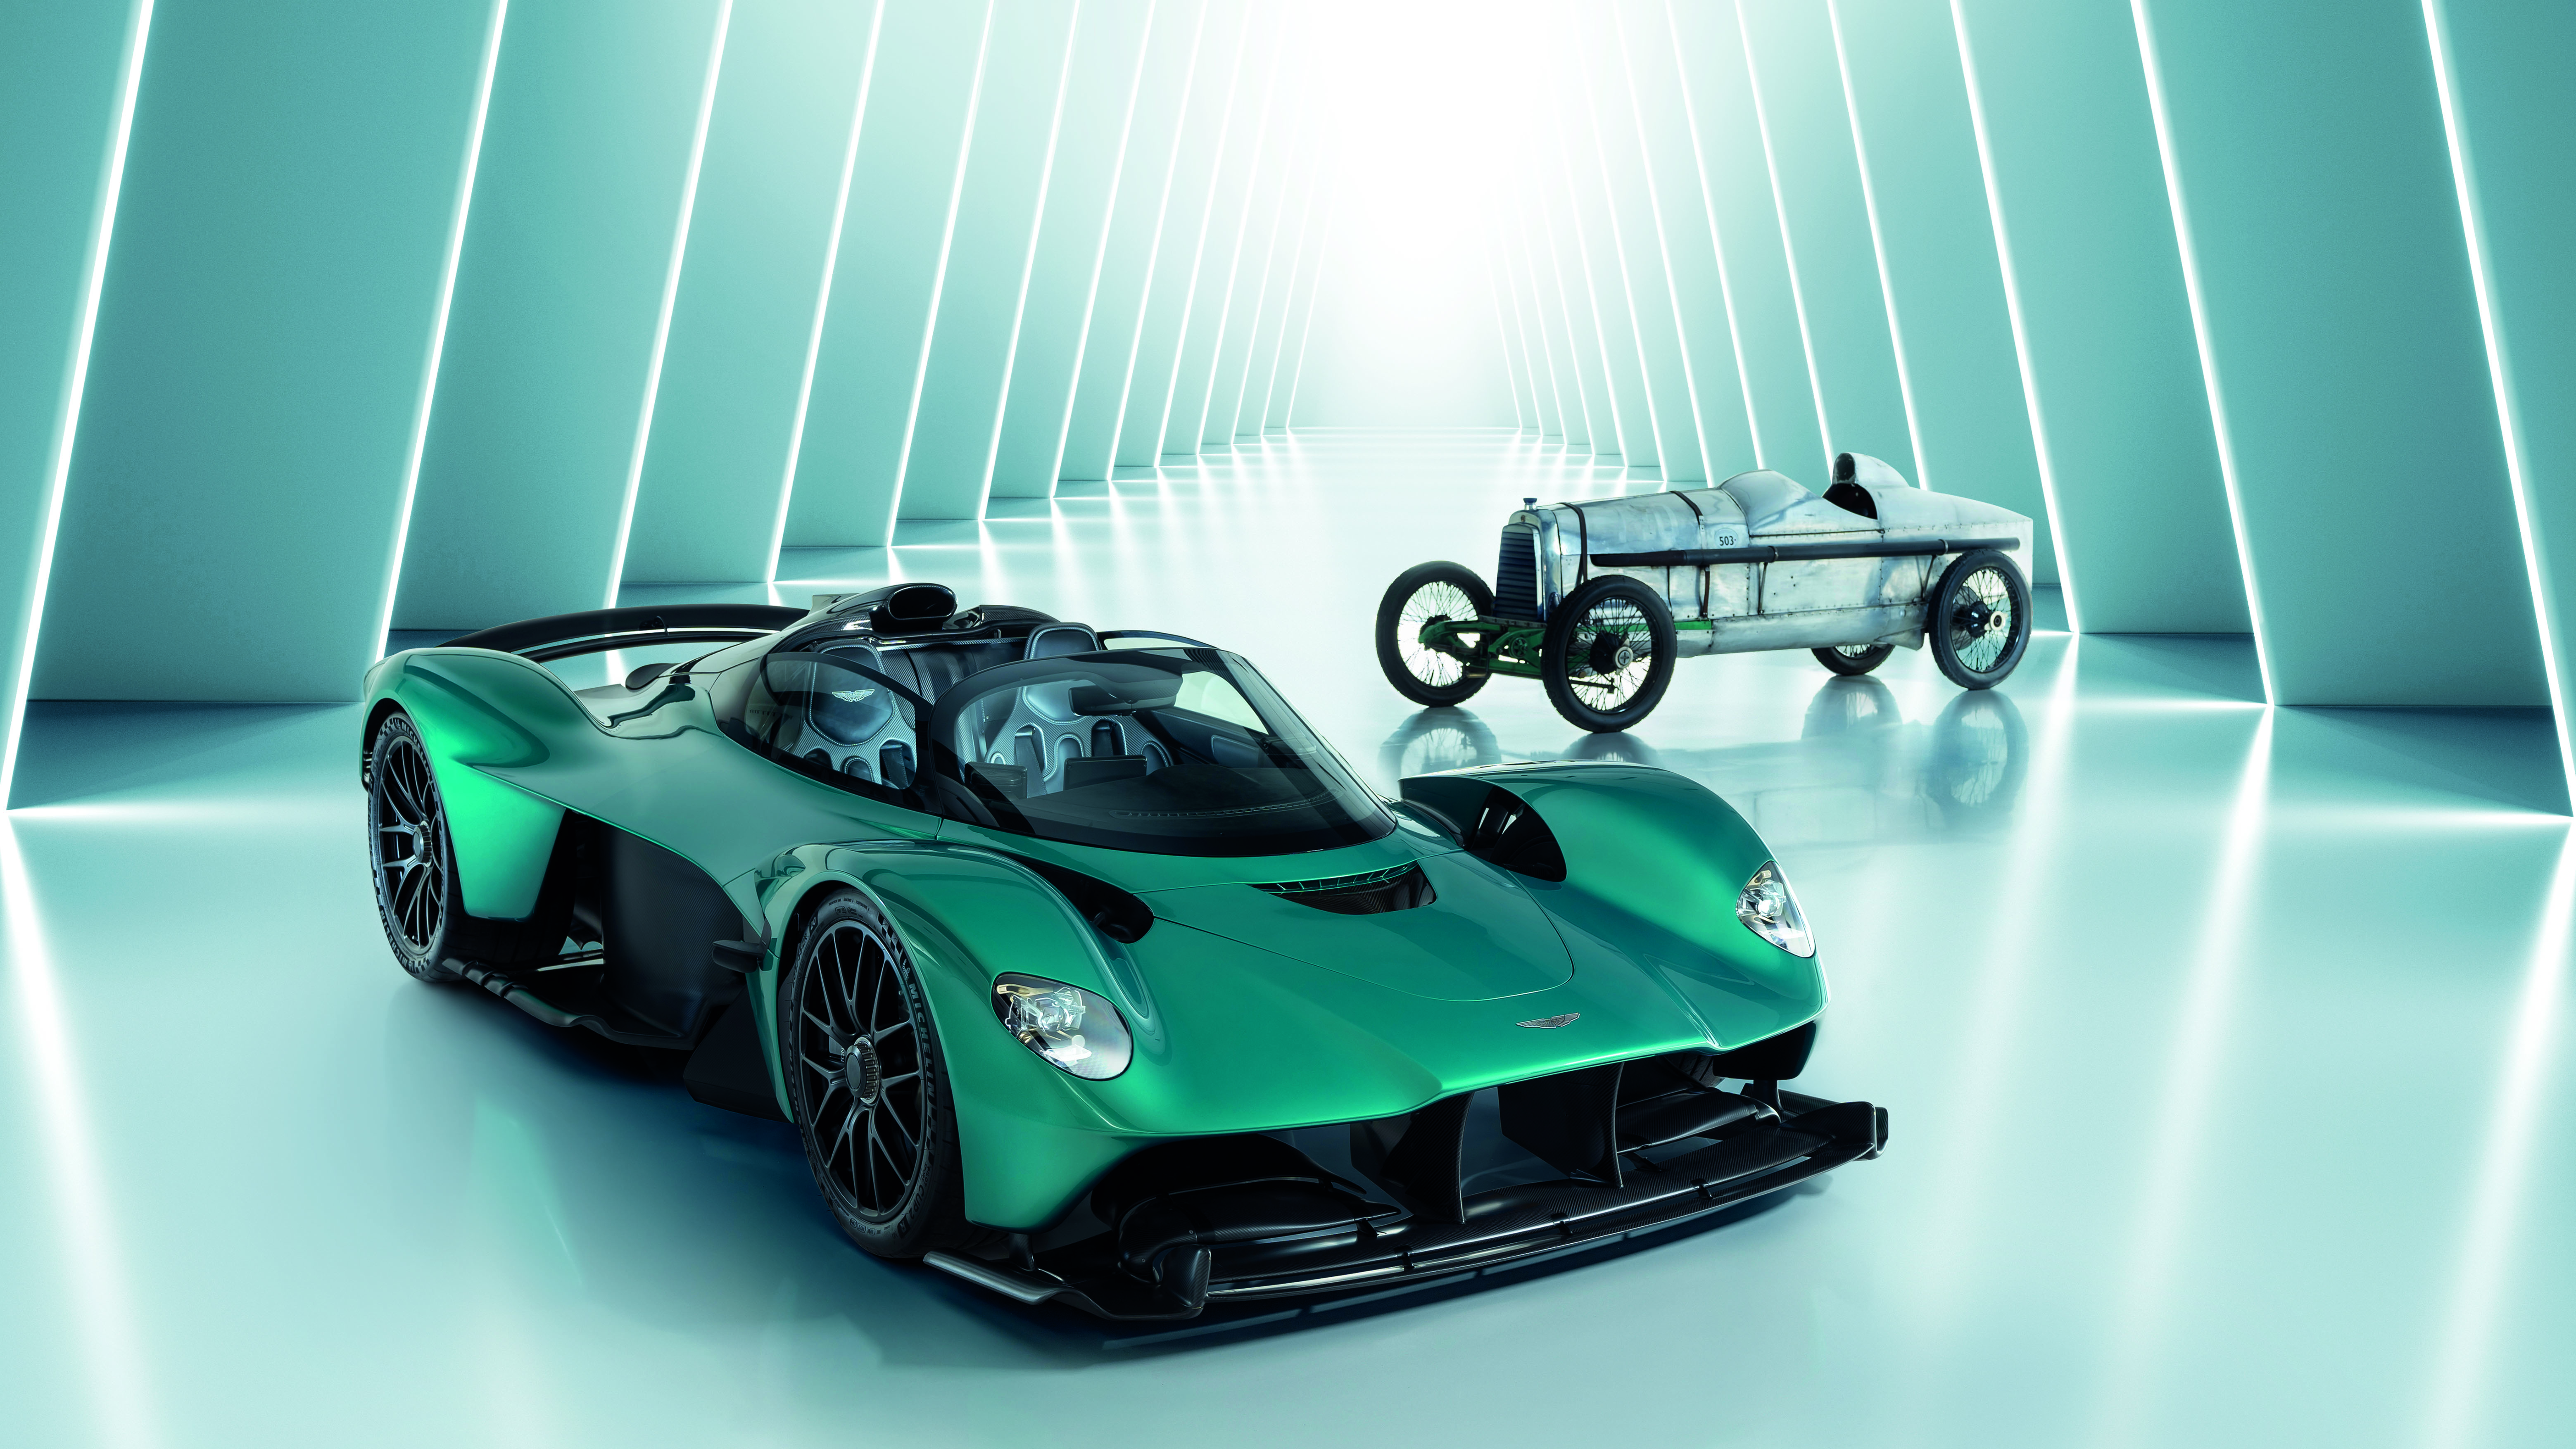 Aston Martin ignites year-long celebration of 110th anniversary